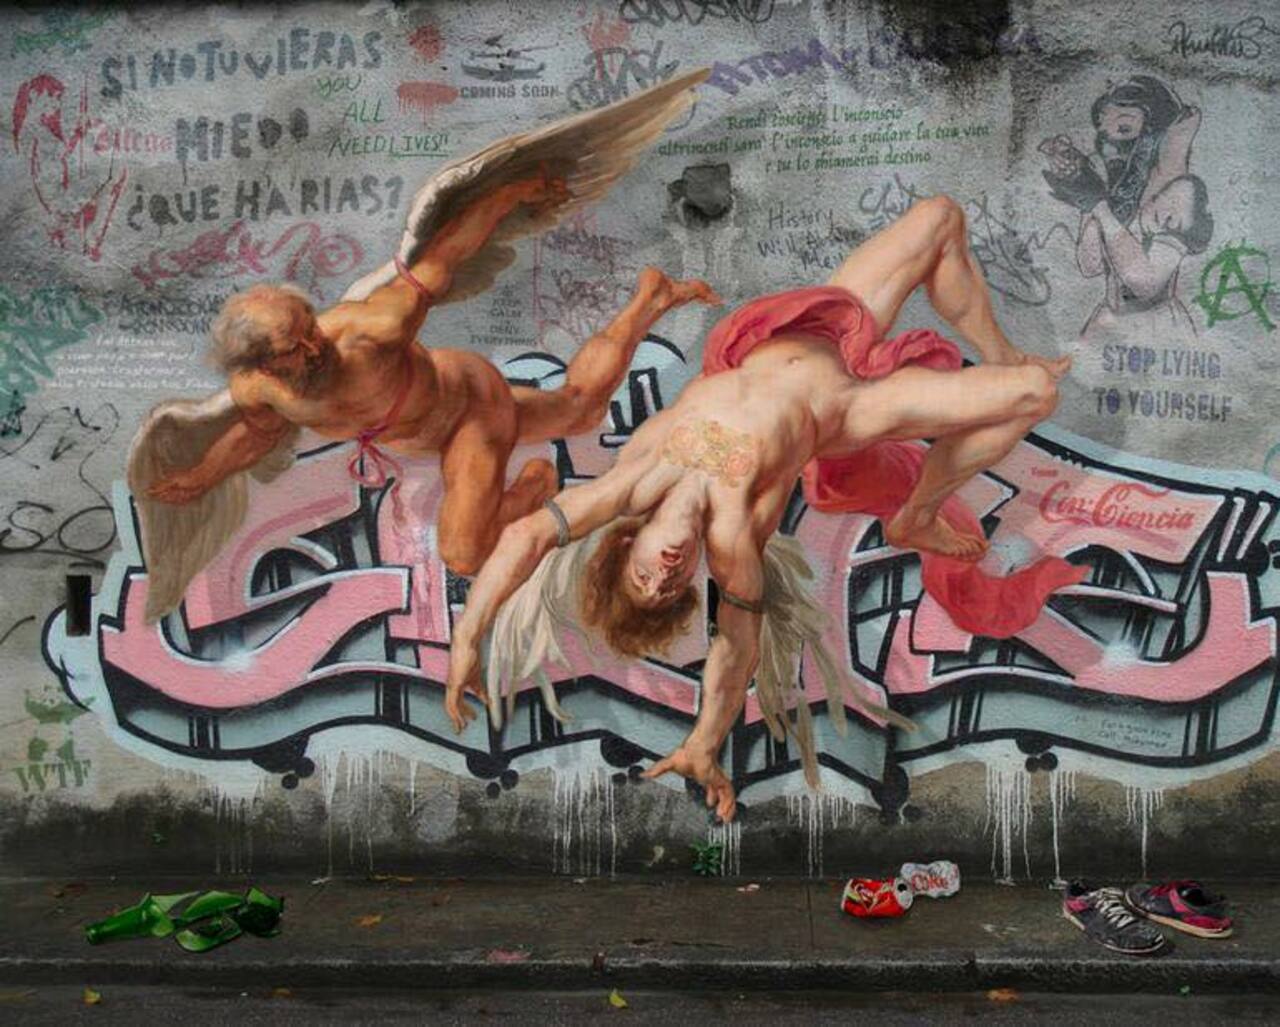 RT @Bastet_11: #streetart by @BattagliniMarco #italy #urbanart #angels #graffiti #wallart #urbano #street #urban #art  #handmade http://t.co/GNAua2dqZQ